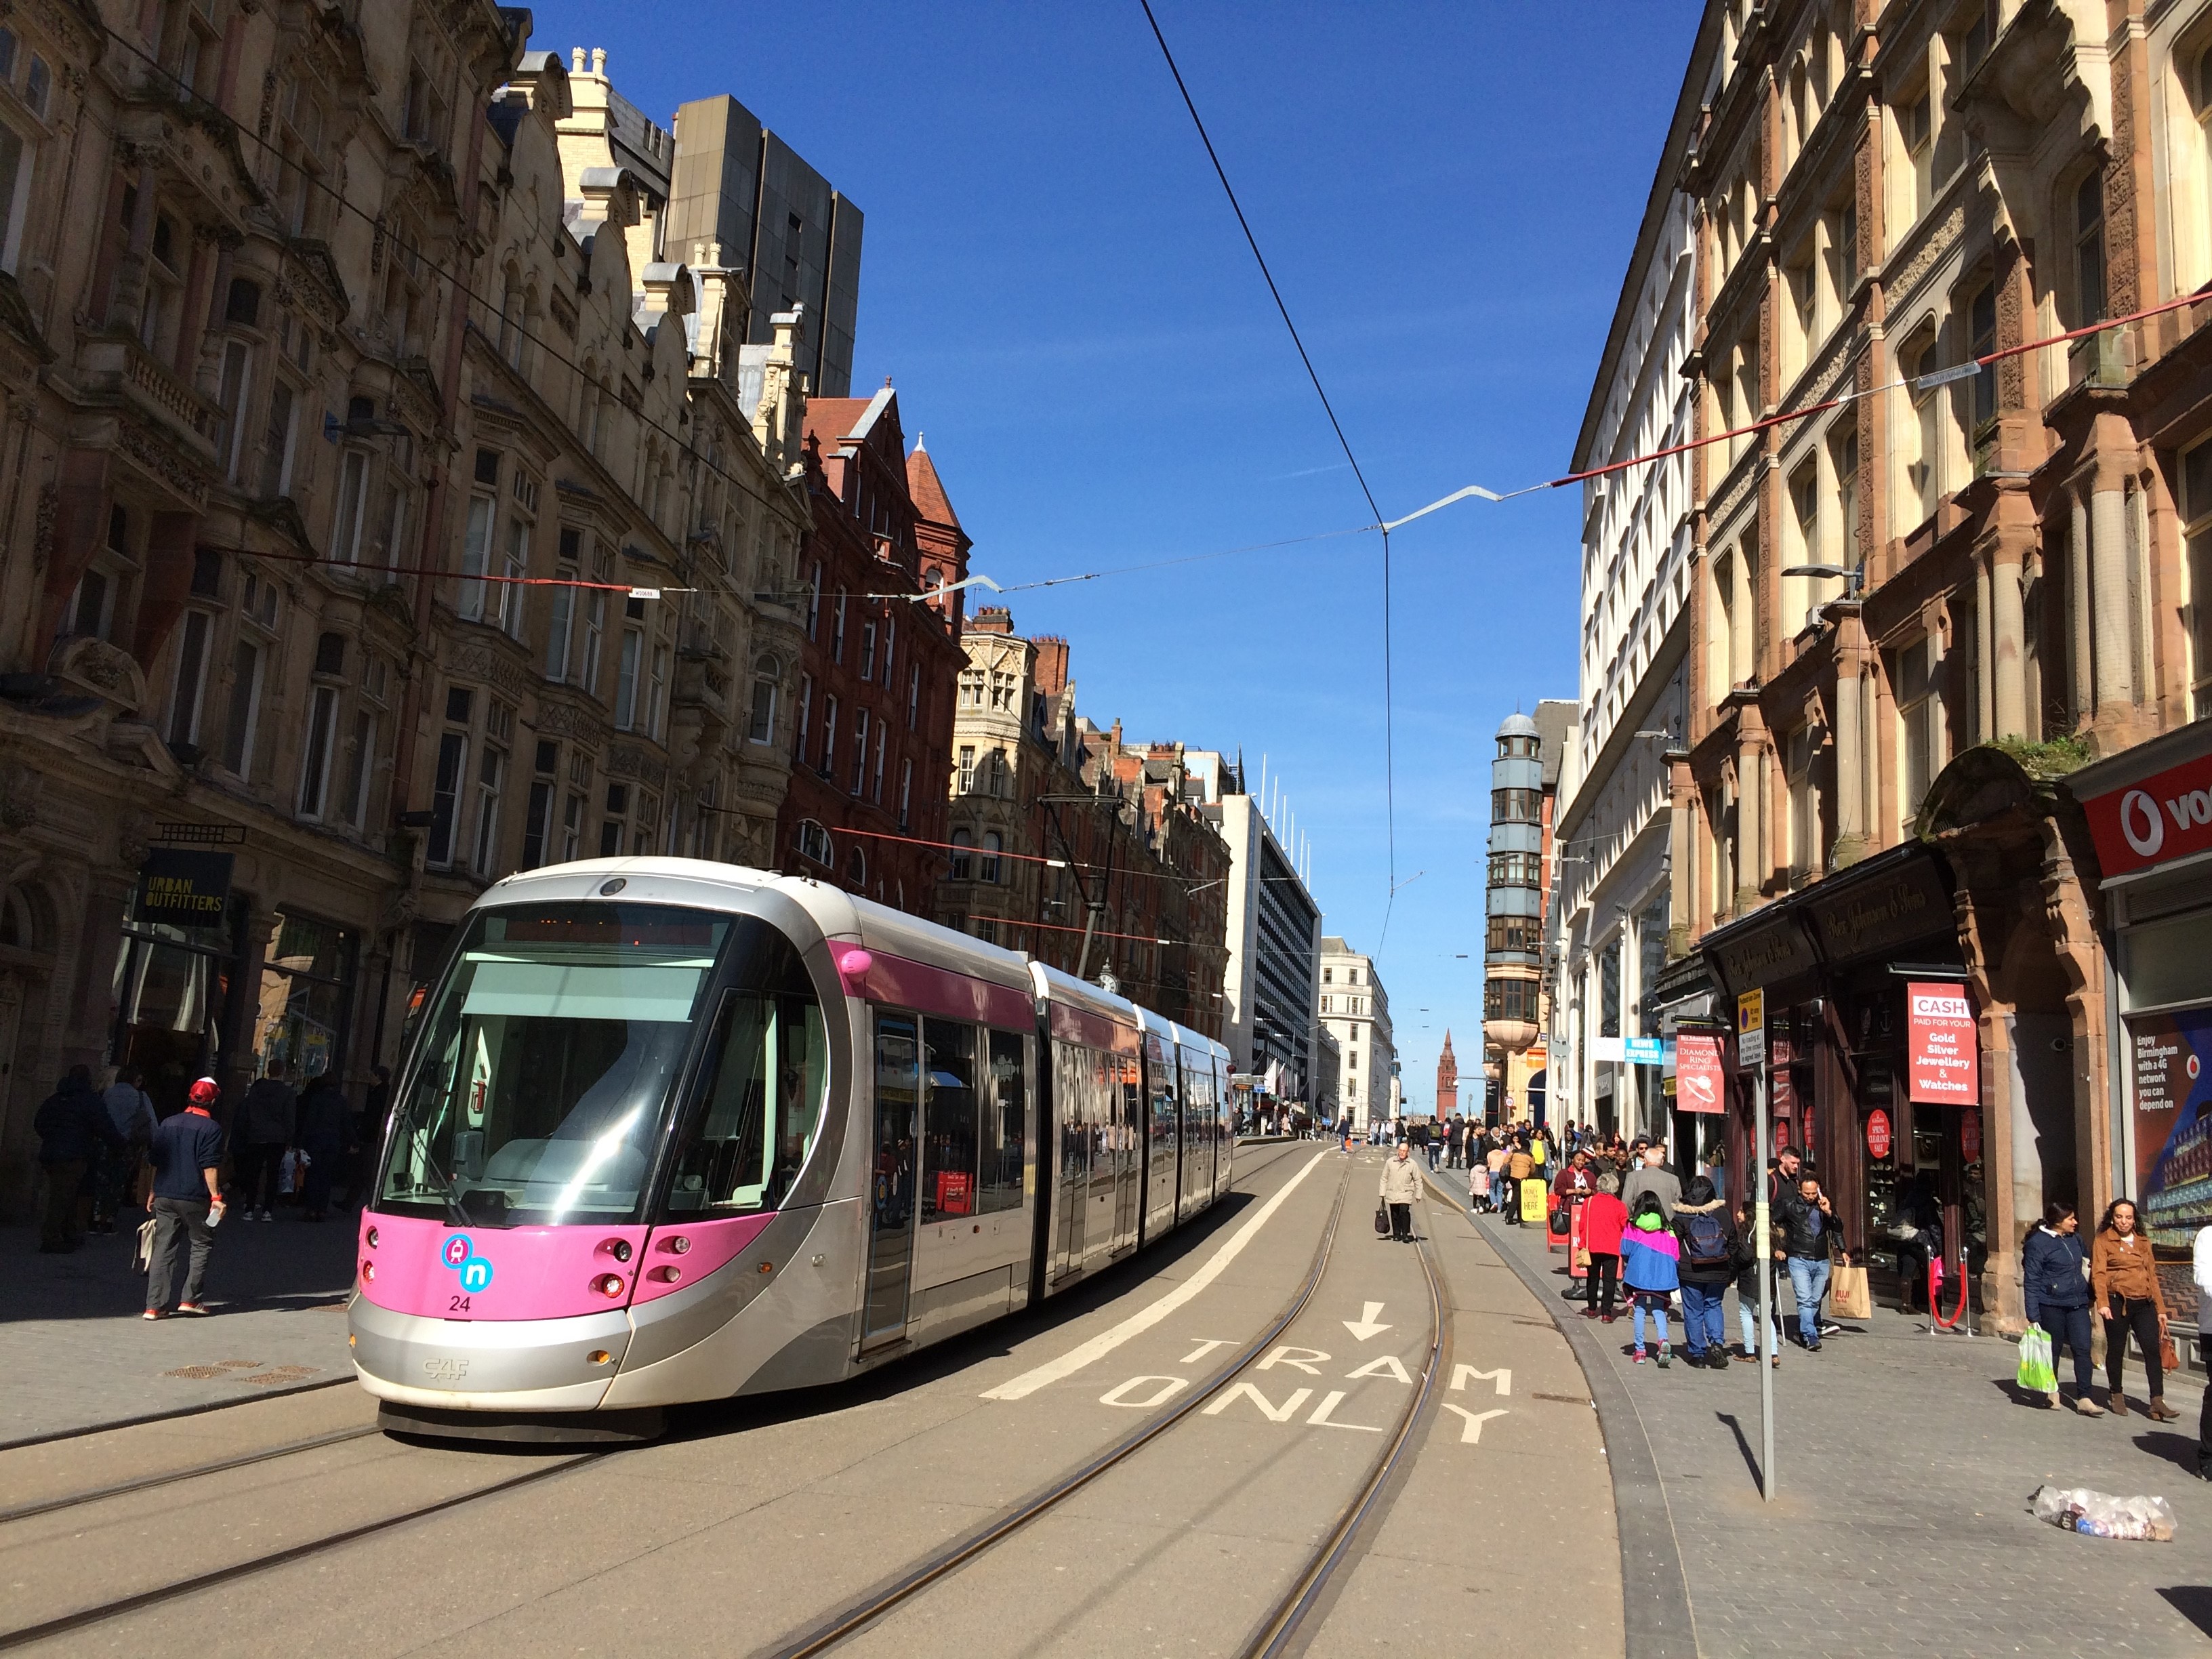 Trams are already in operation in Birmingham city centre